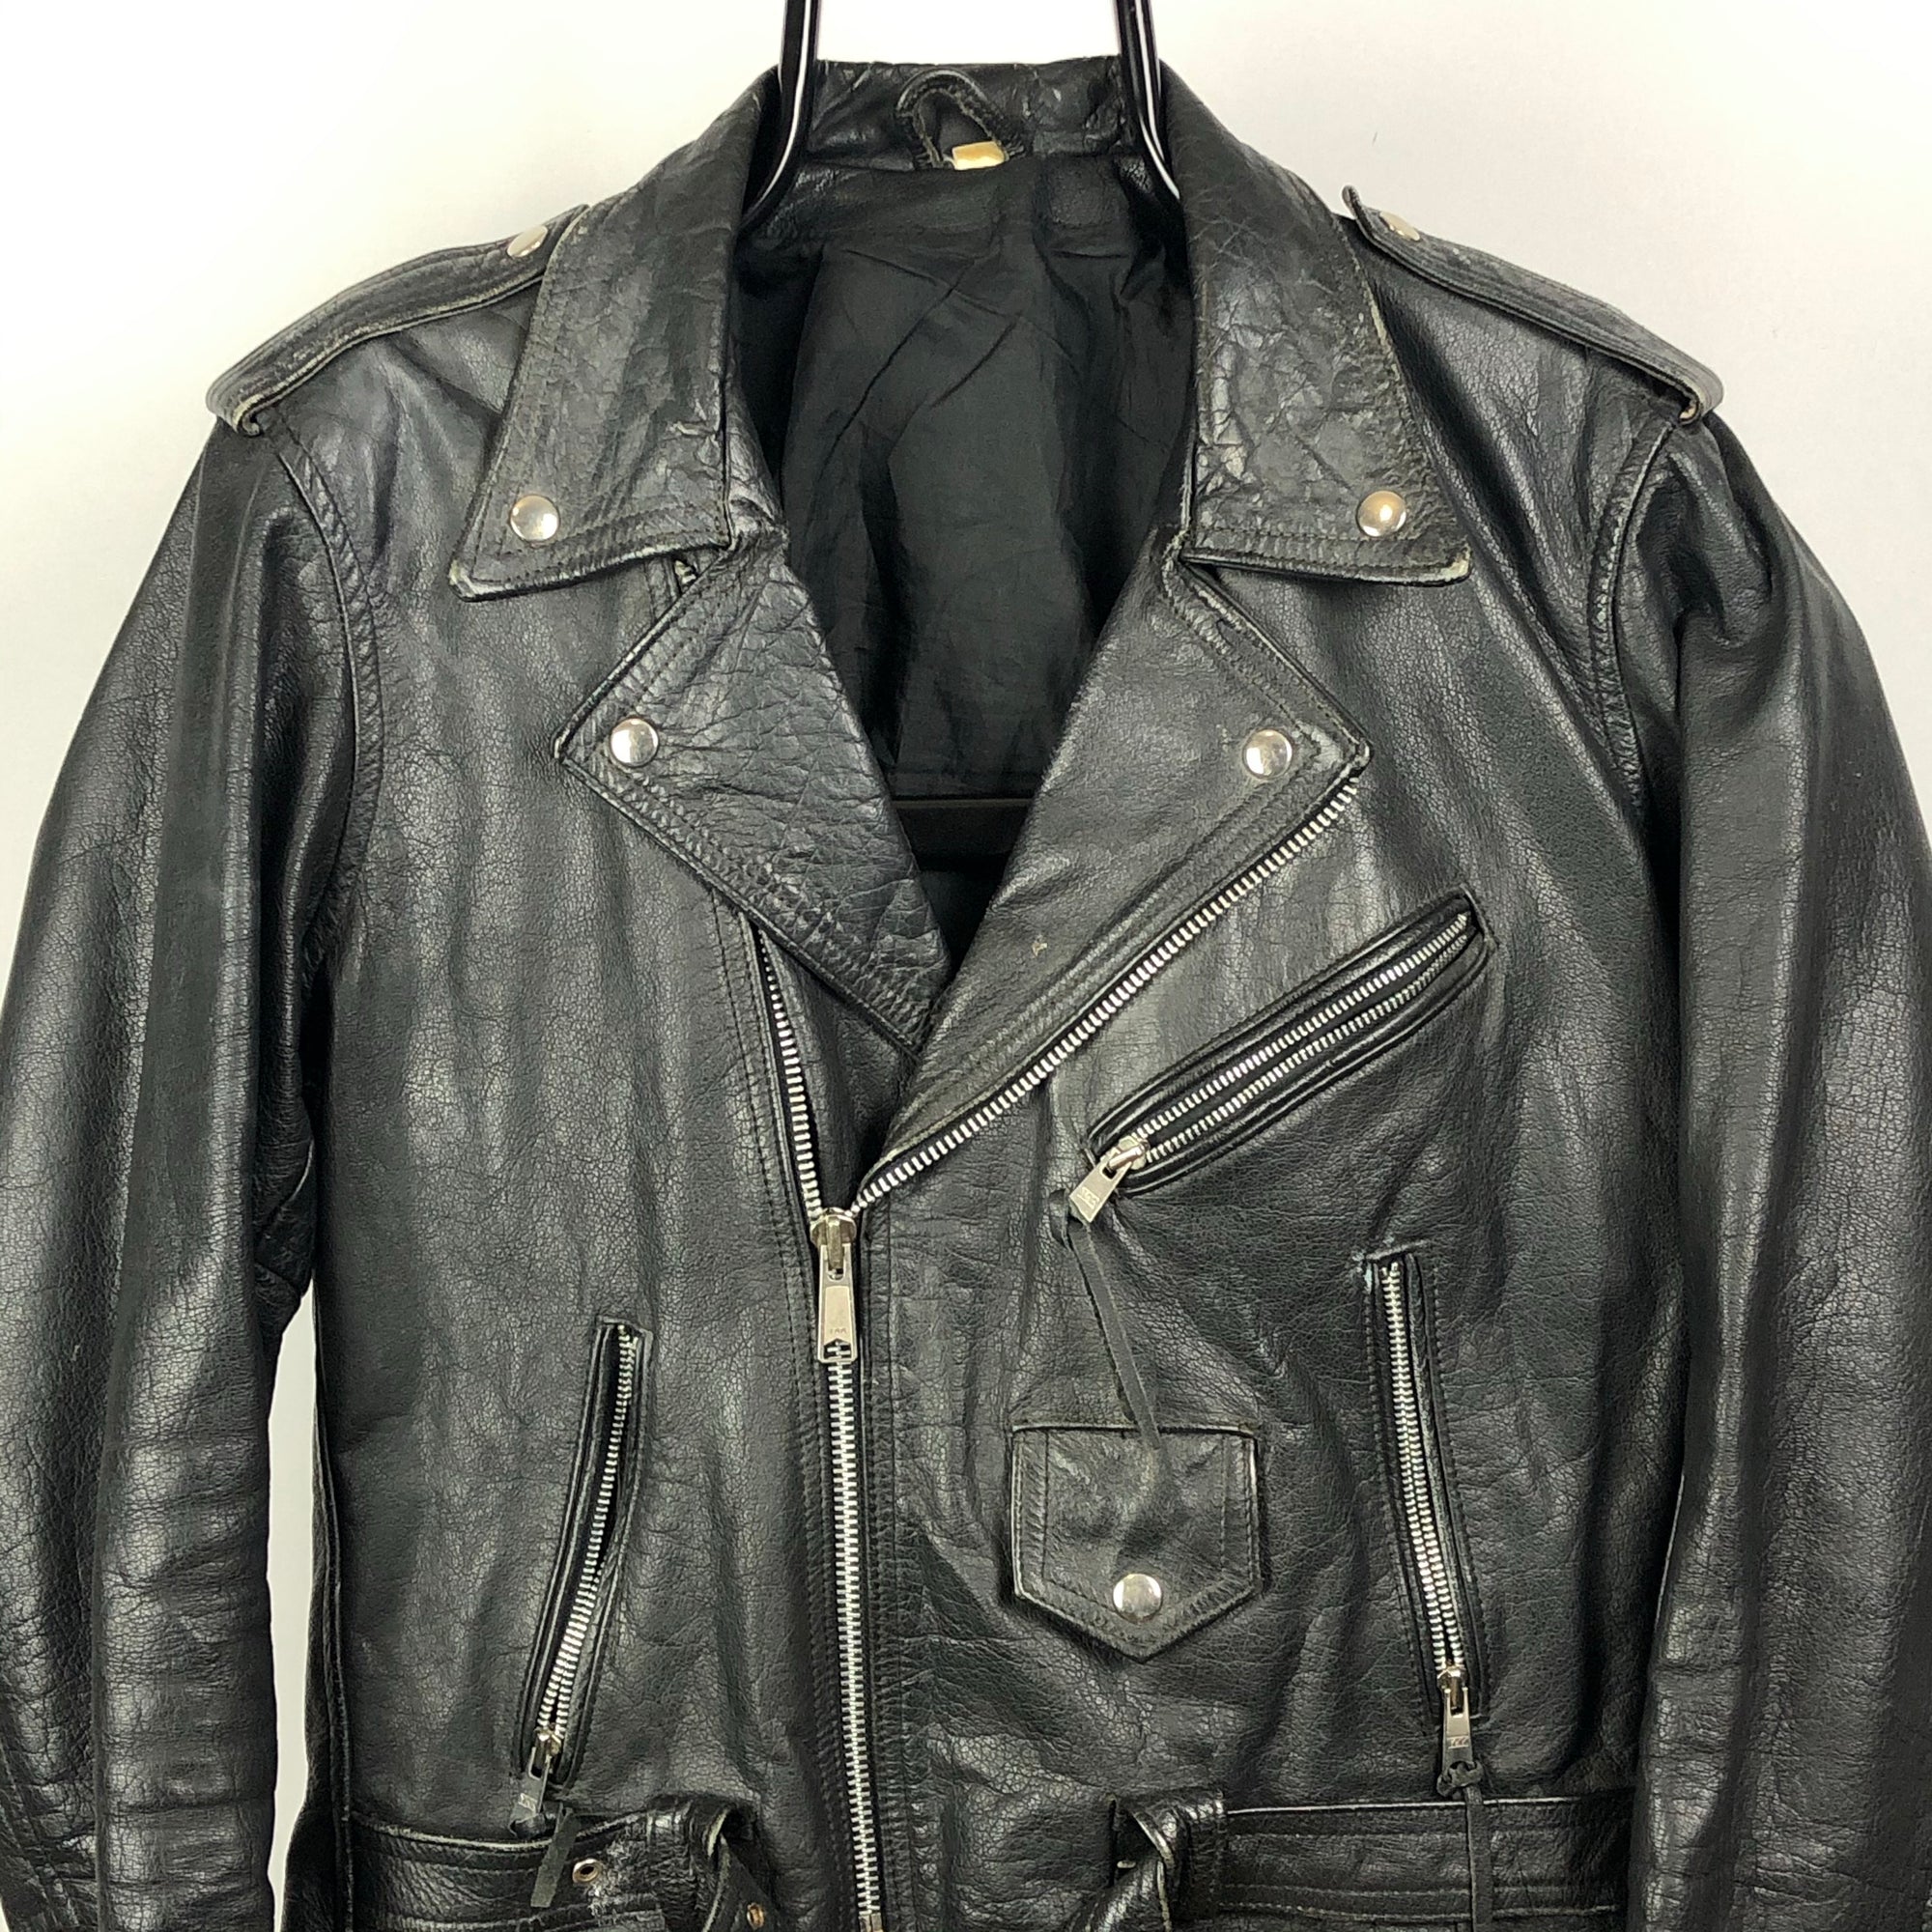 Vintage Leather Jacket in Black - Men’s Small/Women’s Medium